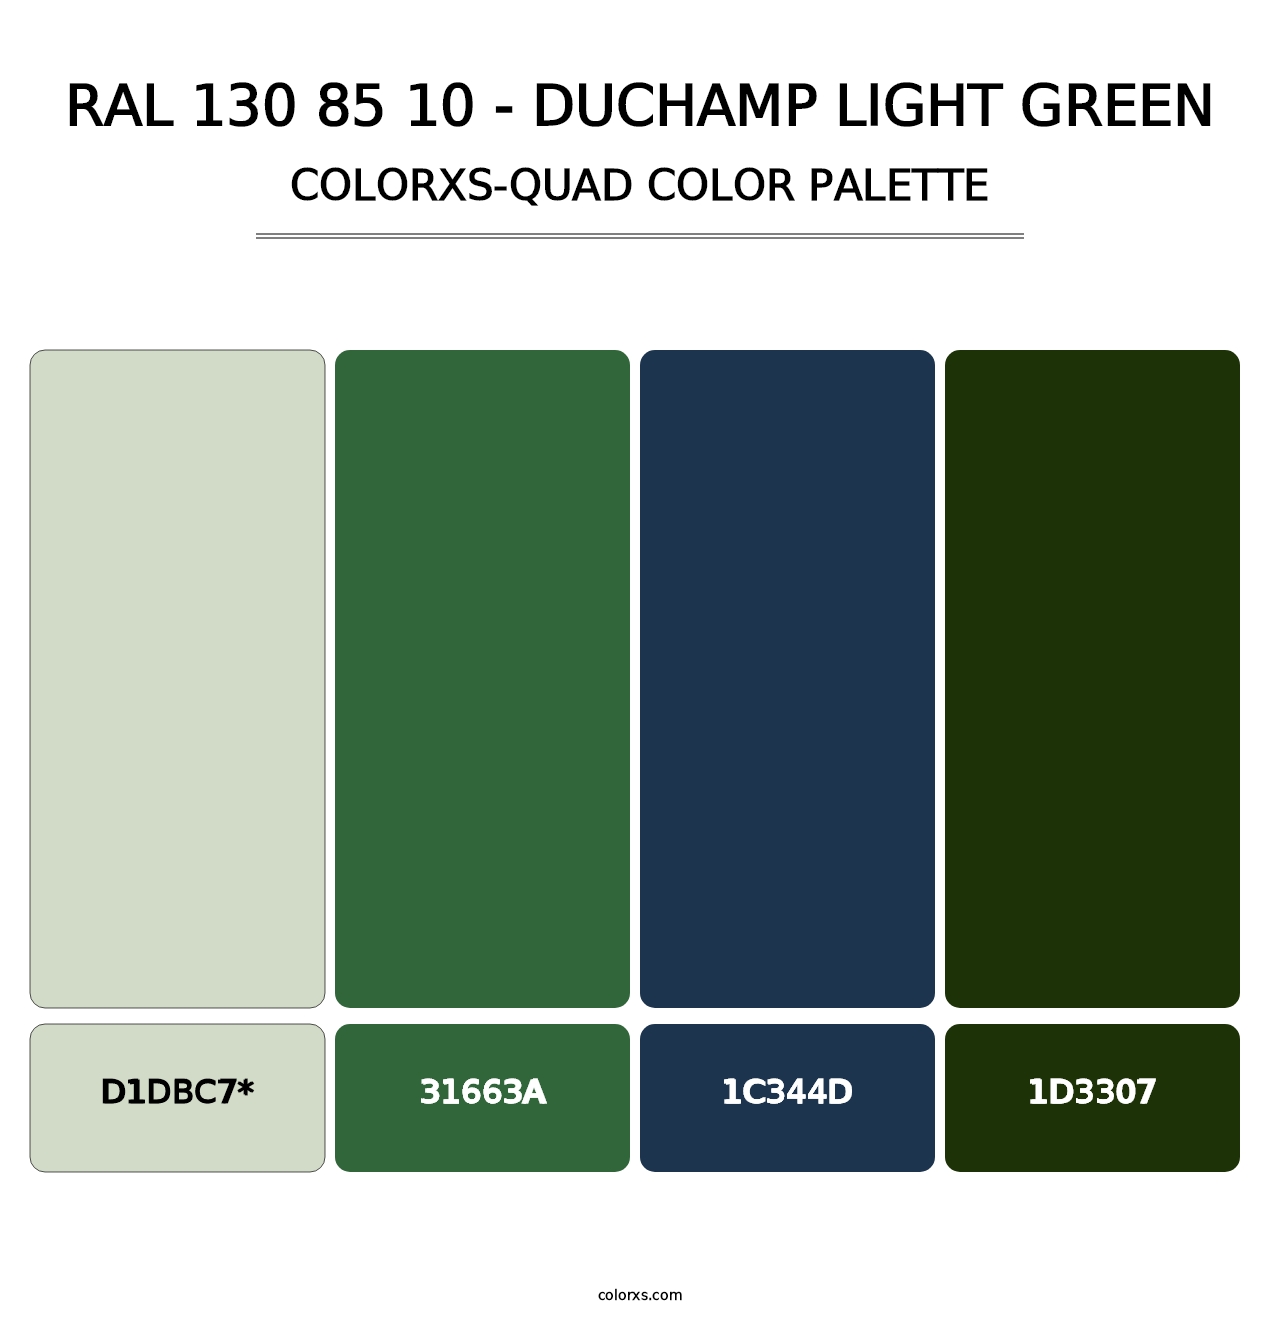 RAL 130 85 10 - Duchamp Light Green - Colorxs Quad Palette